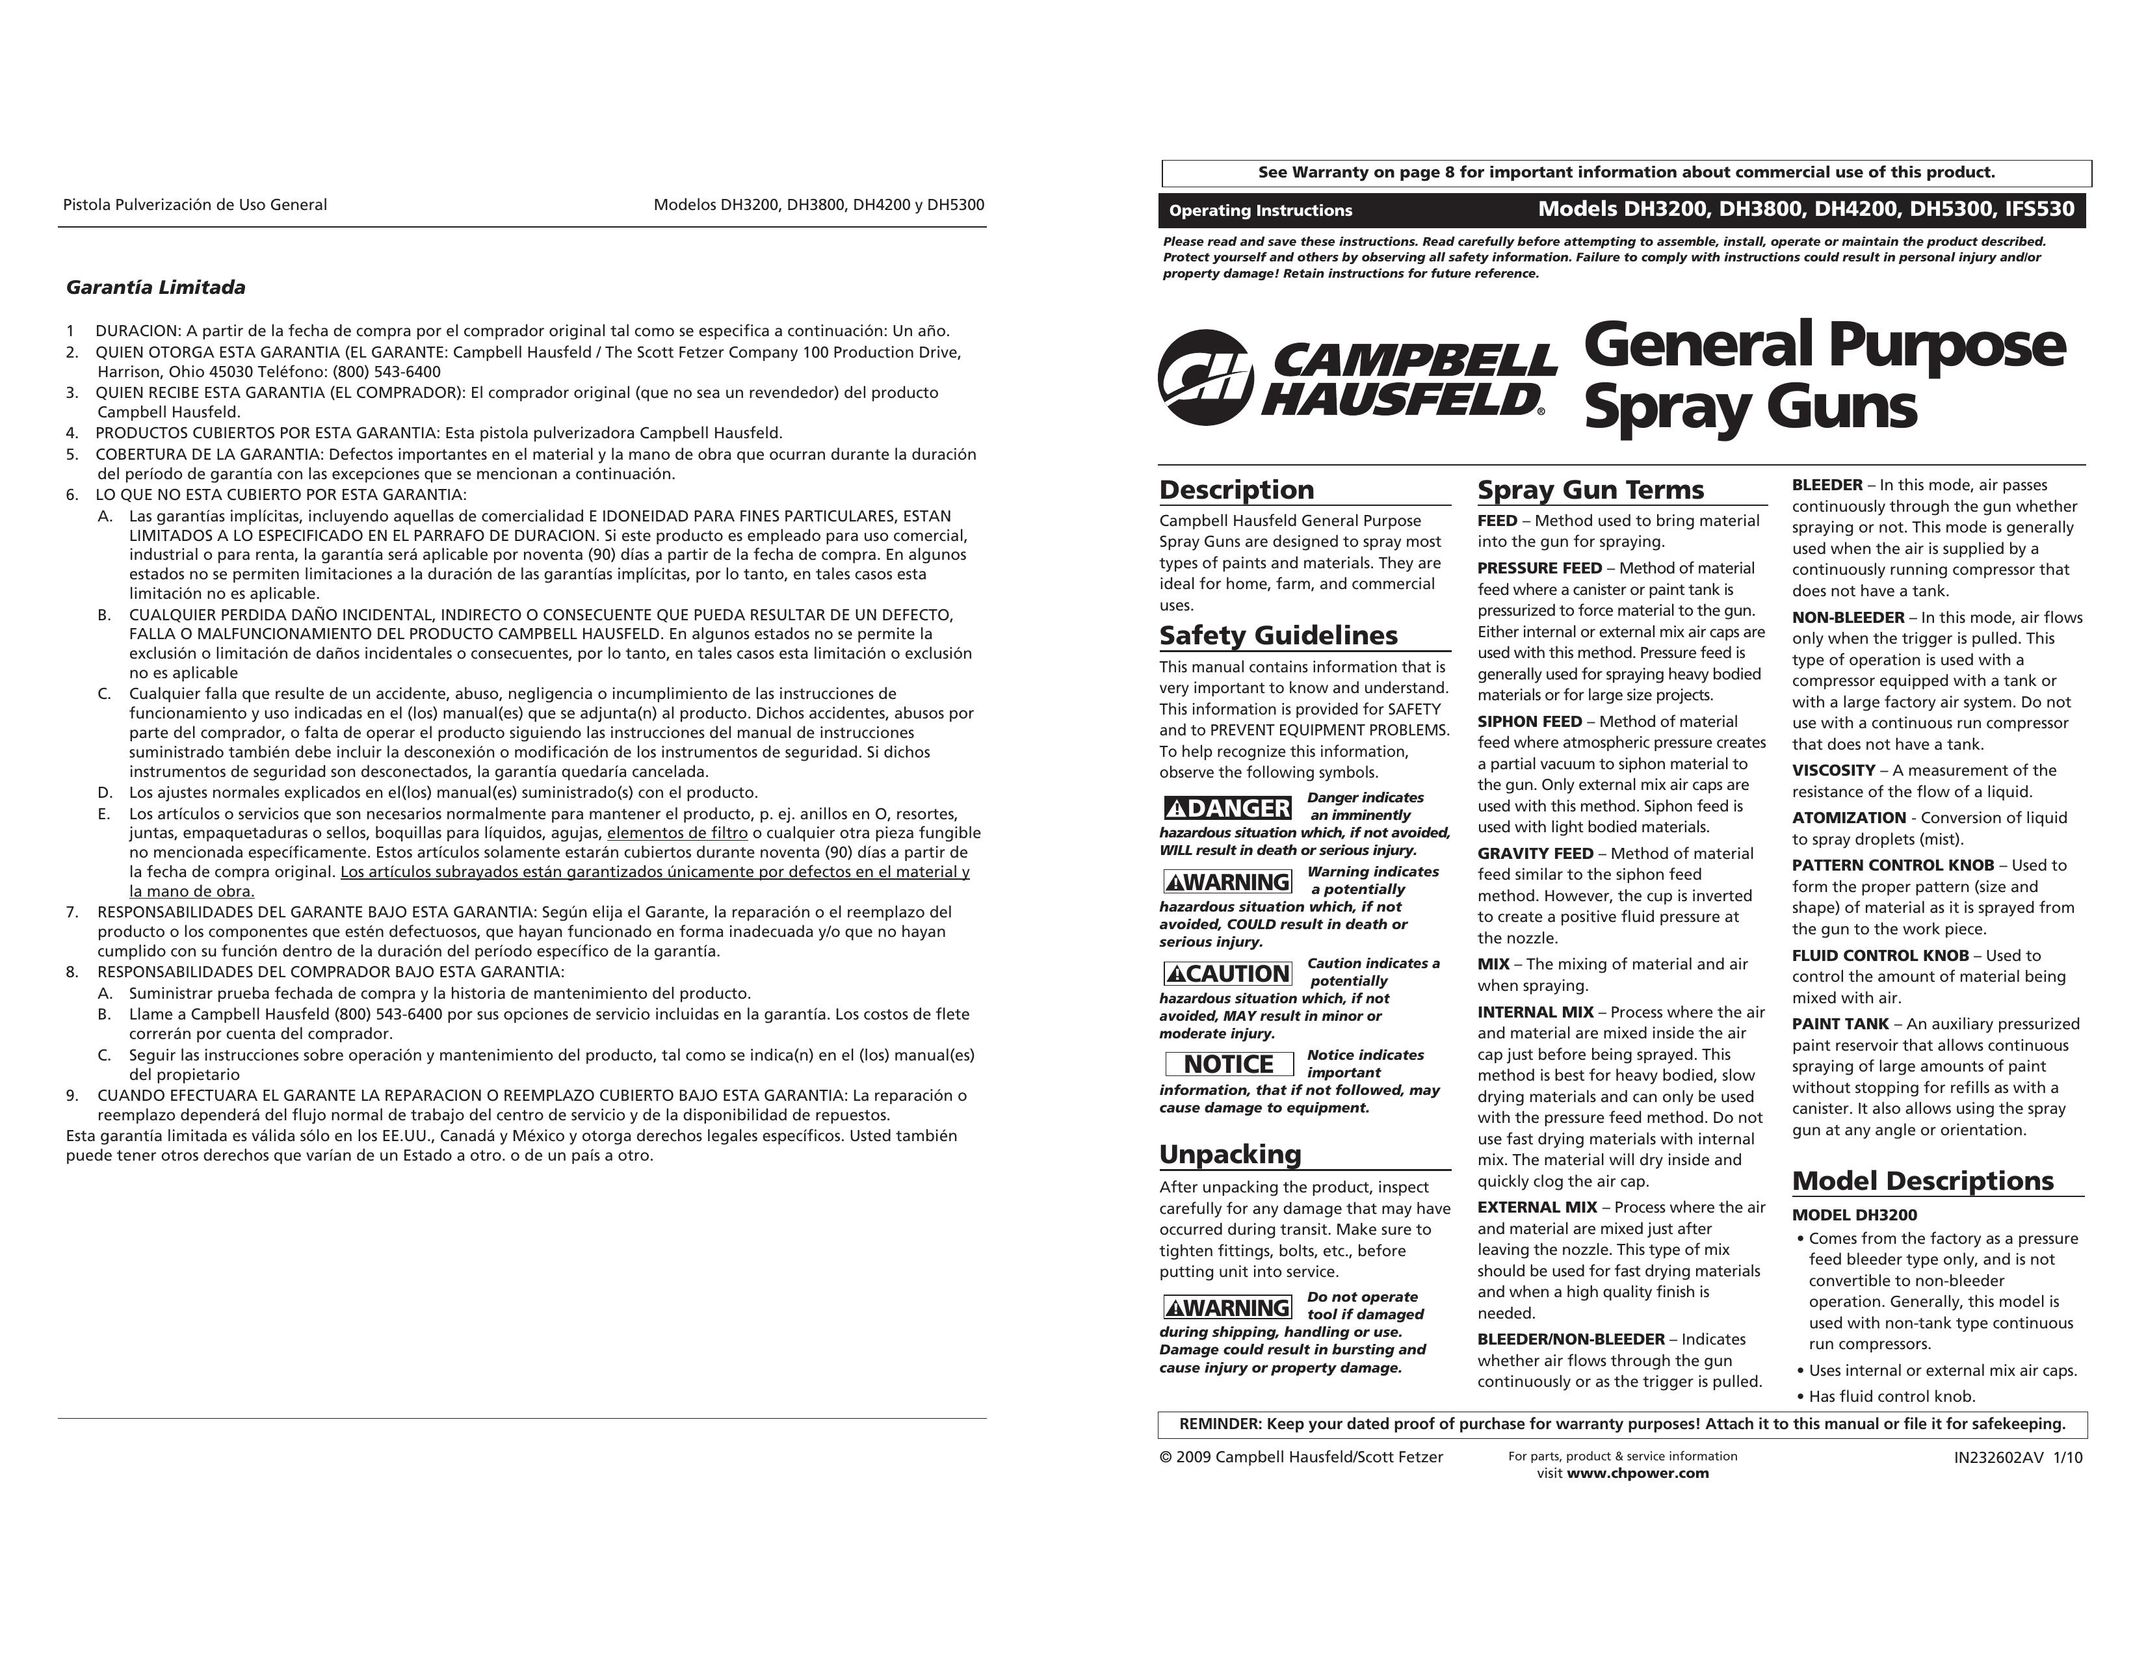 Campbell Hausfeld DH4200 Paint Sprayer User Manual